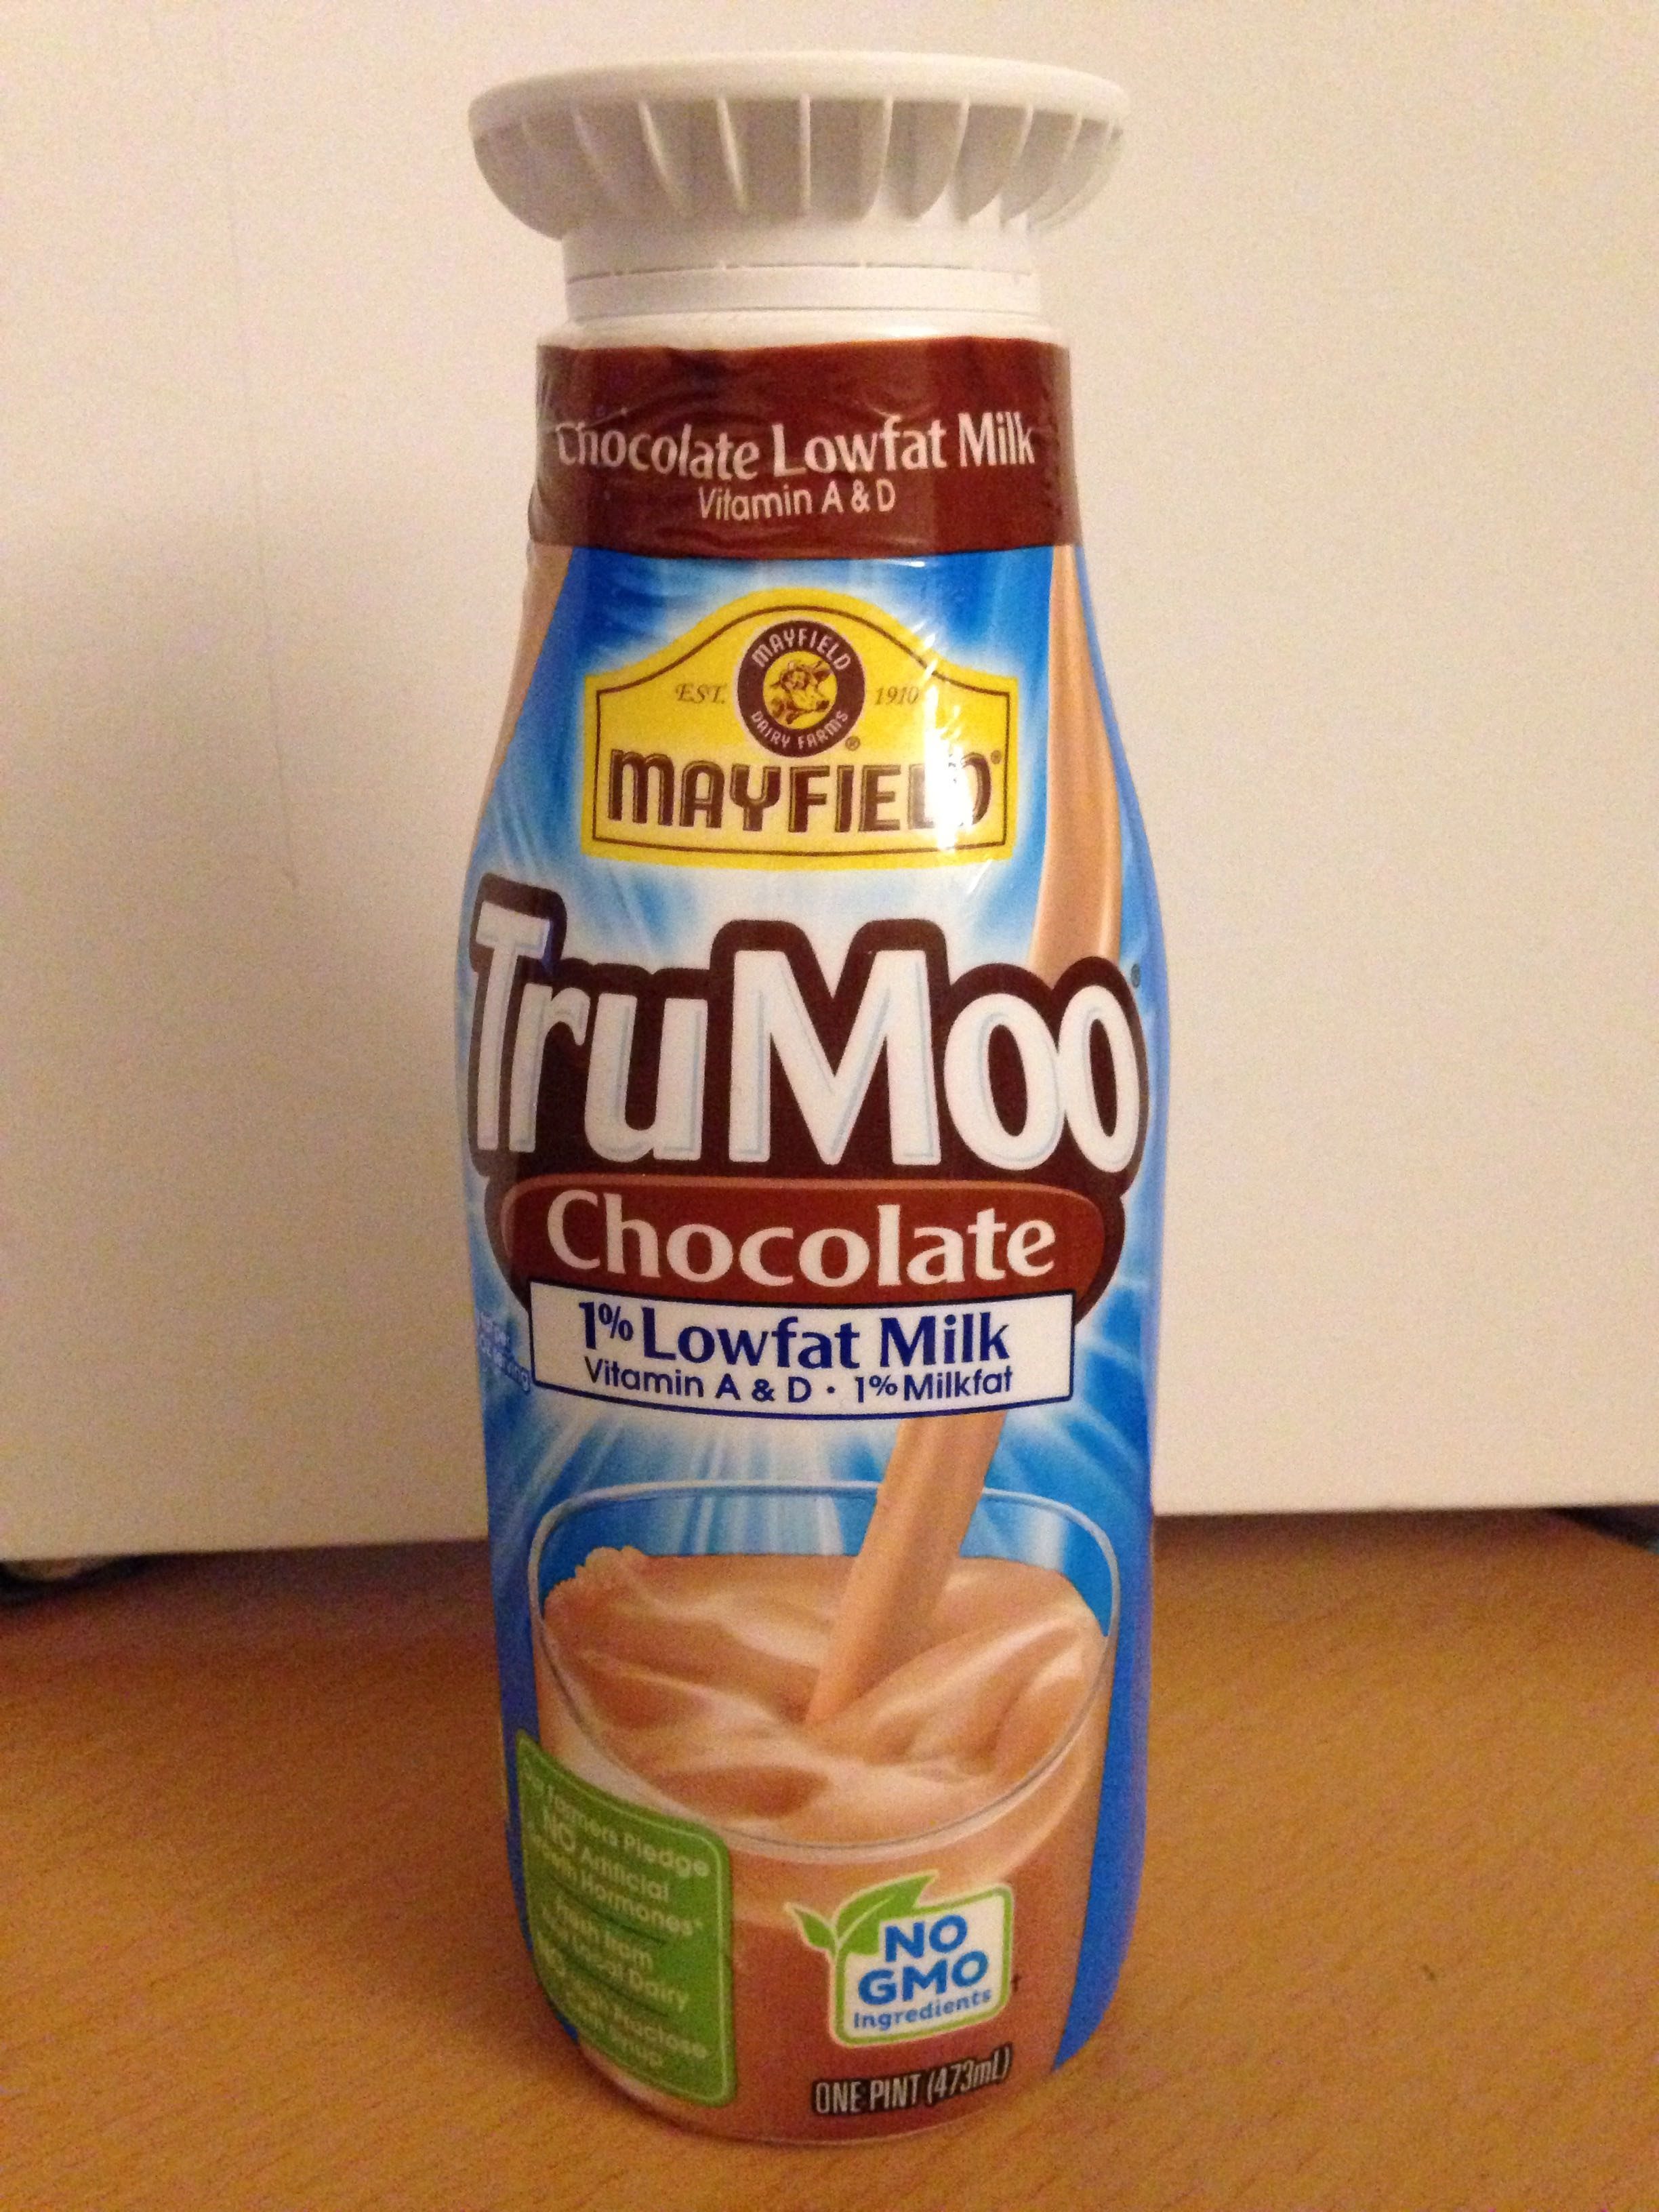 TruMoo Chocolate 1% Lowfat Milk - Mayfield